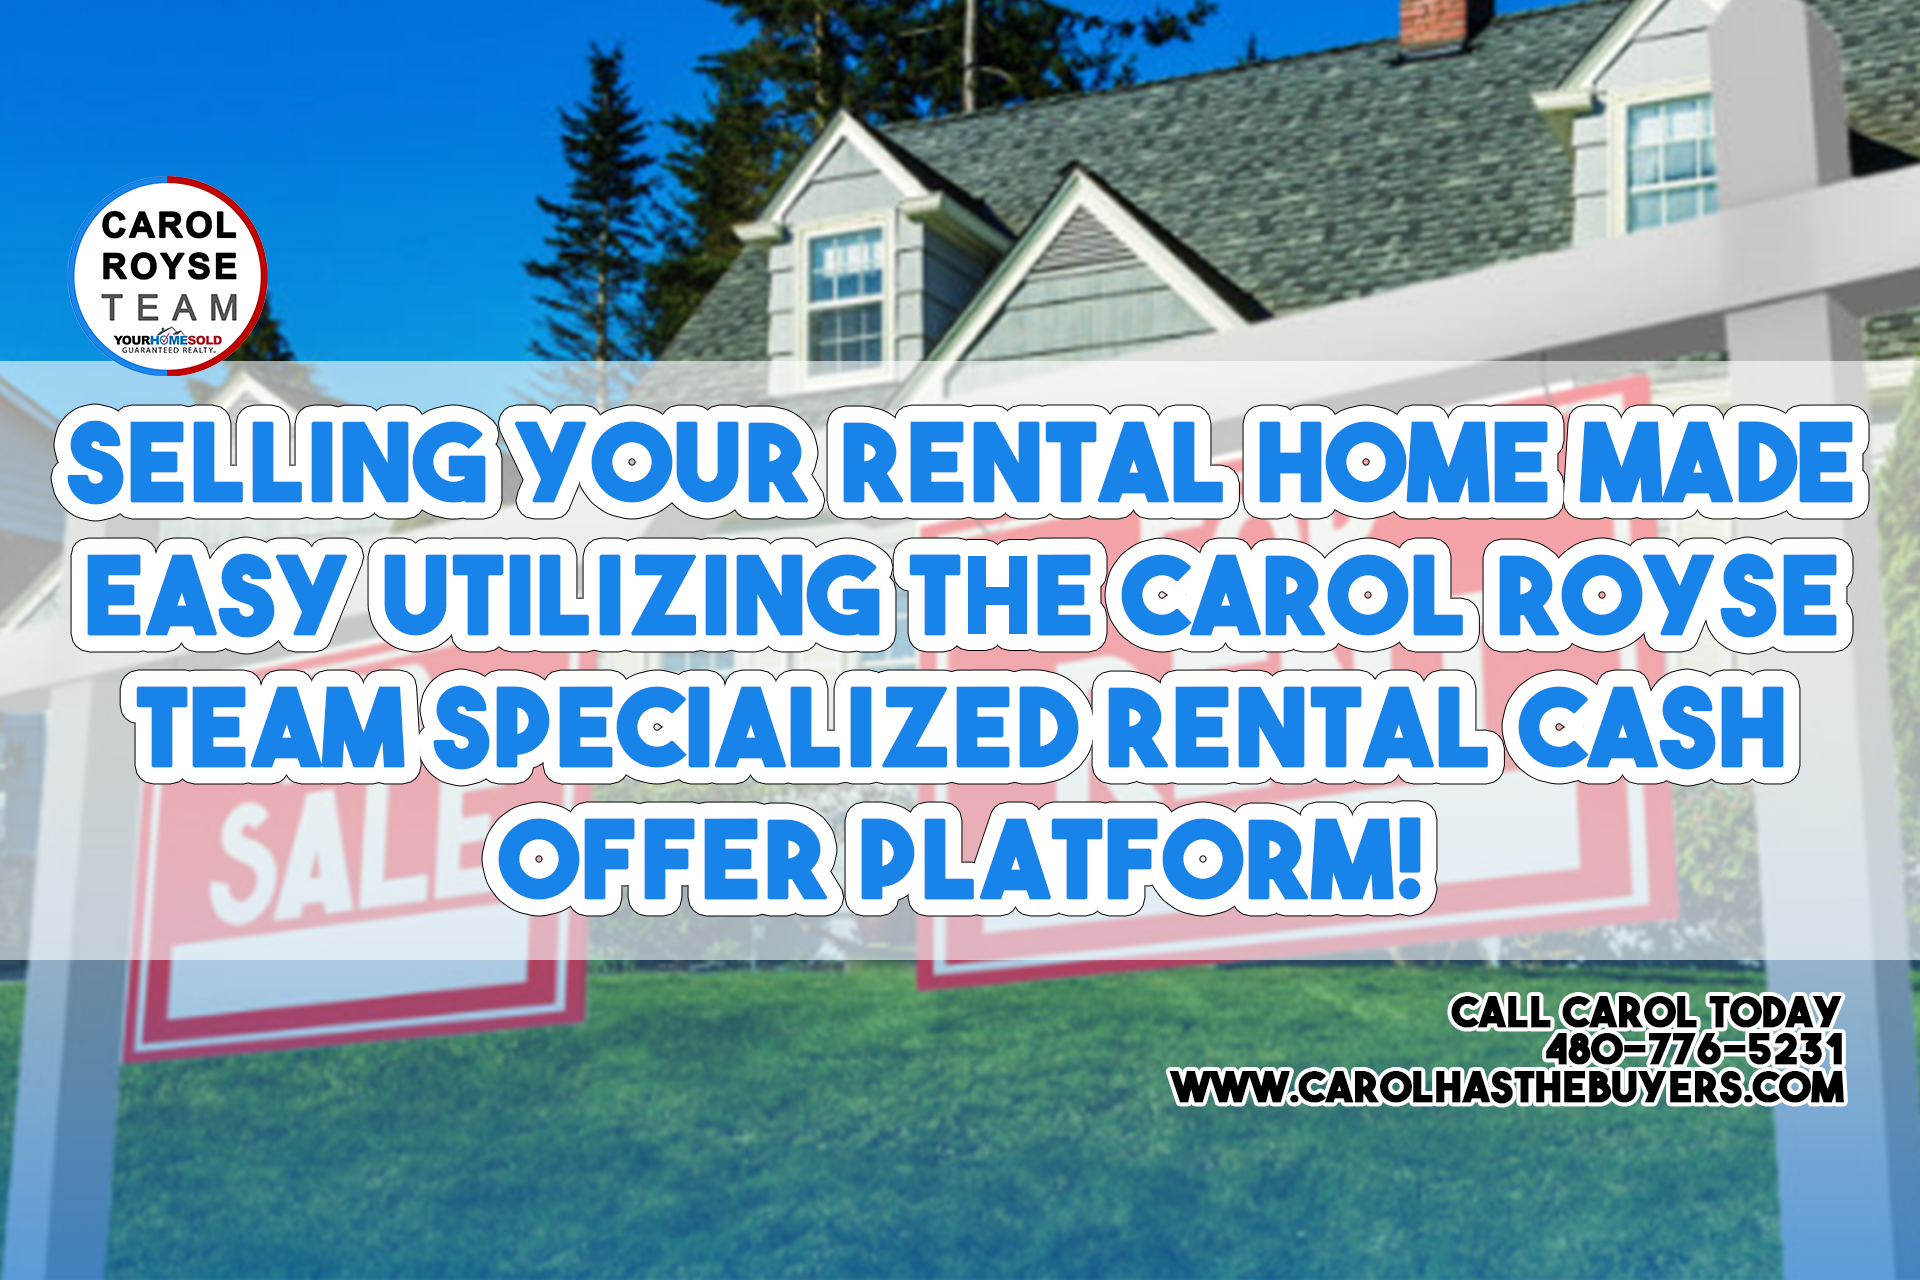 Selling Your Rental Home Made Easy Utilizing the Carol Royse Team Specialized Rental Cash Offer Platform!